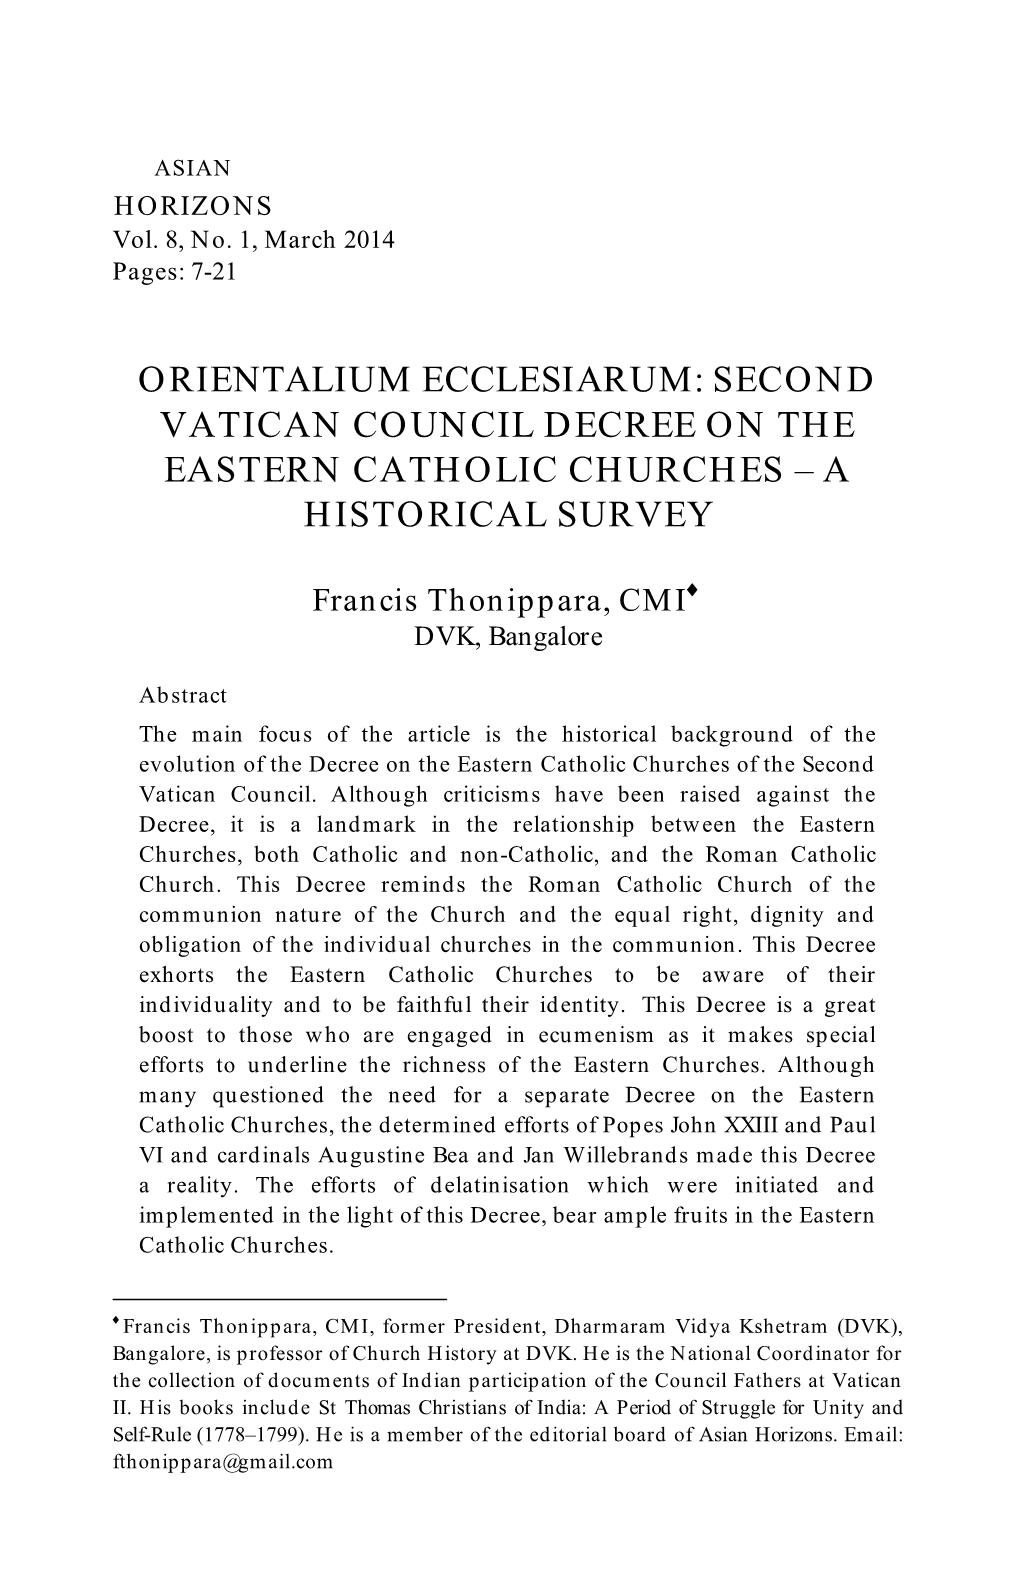 Orientalium Ecclesiarum: Second Vatican Council Decree on the Eastern Catholic Churches – a Historical Survey